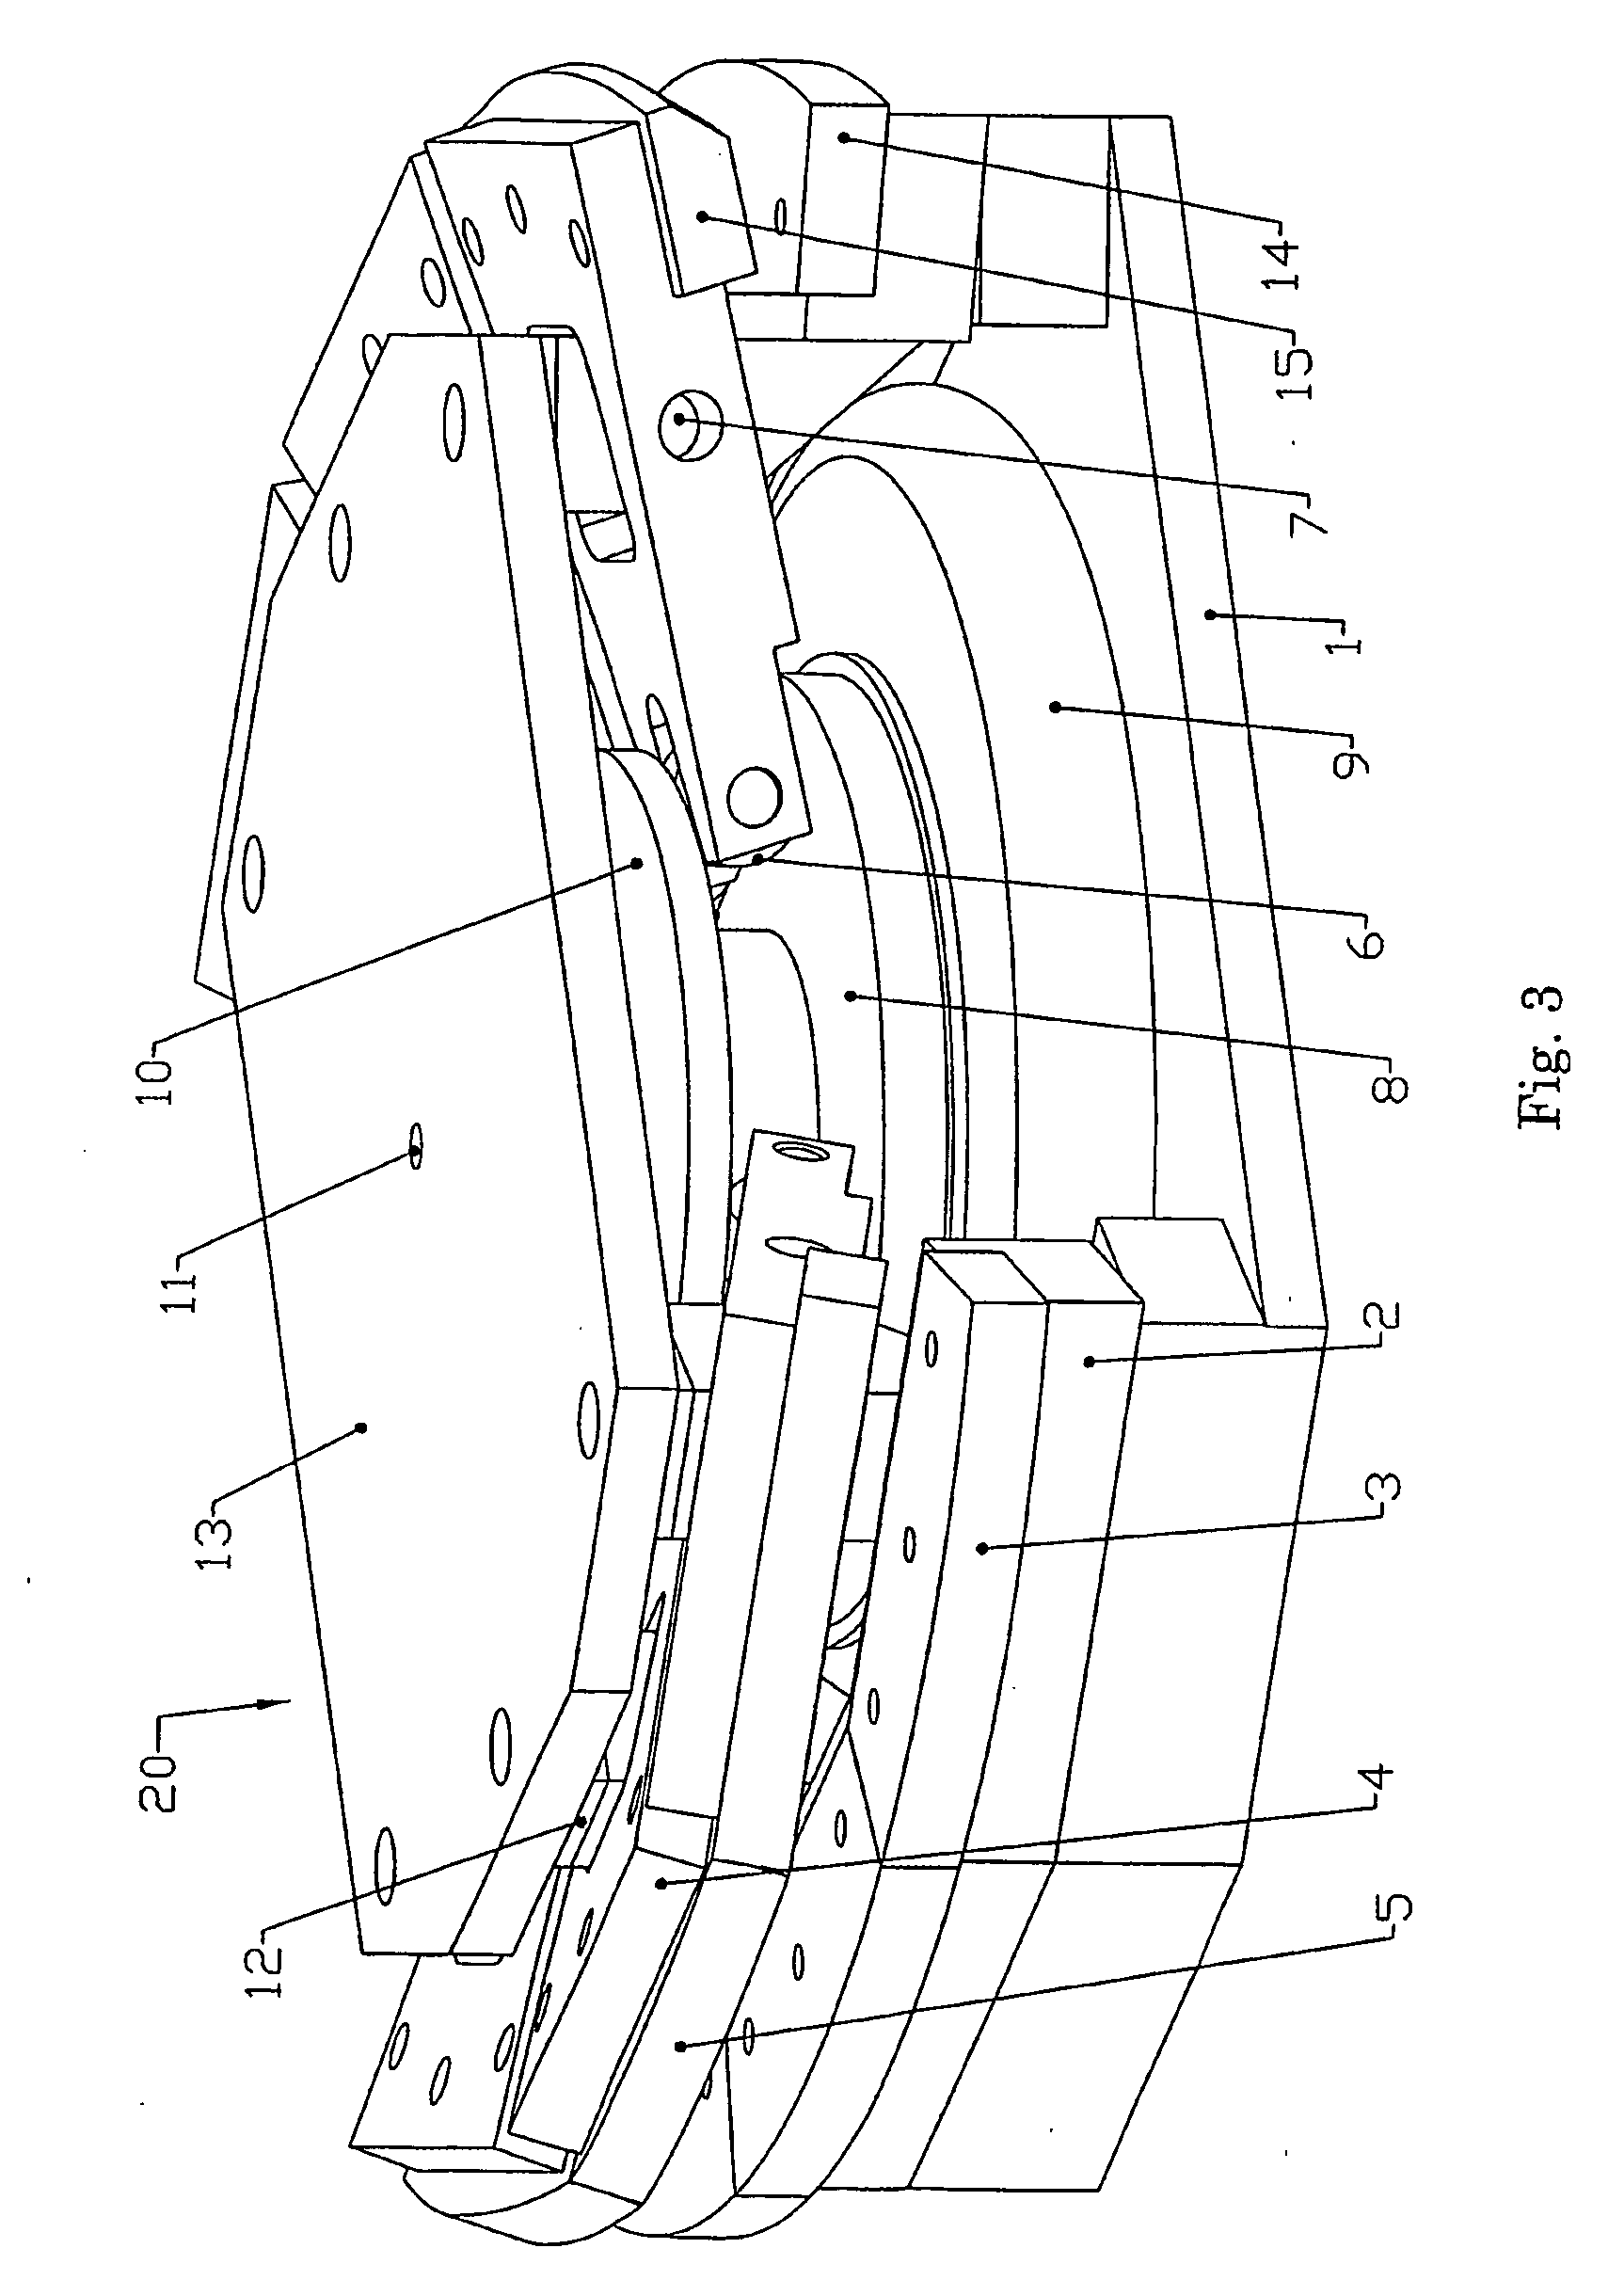 Portable hemming apparatus and method